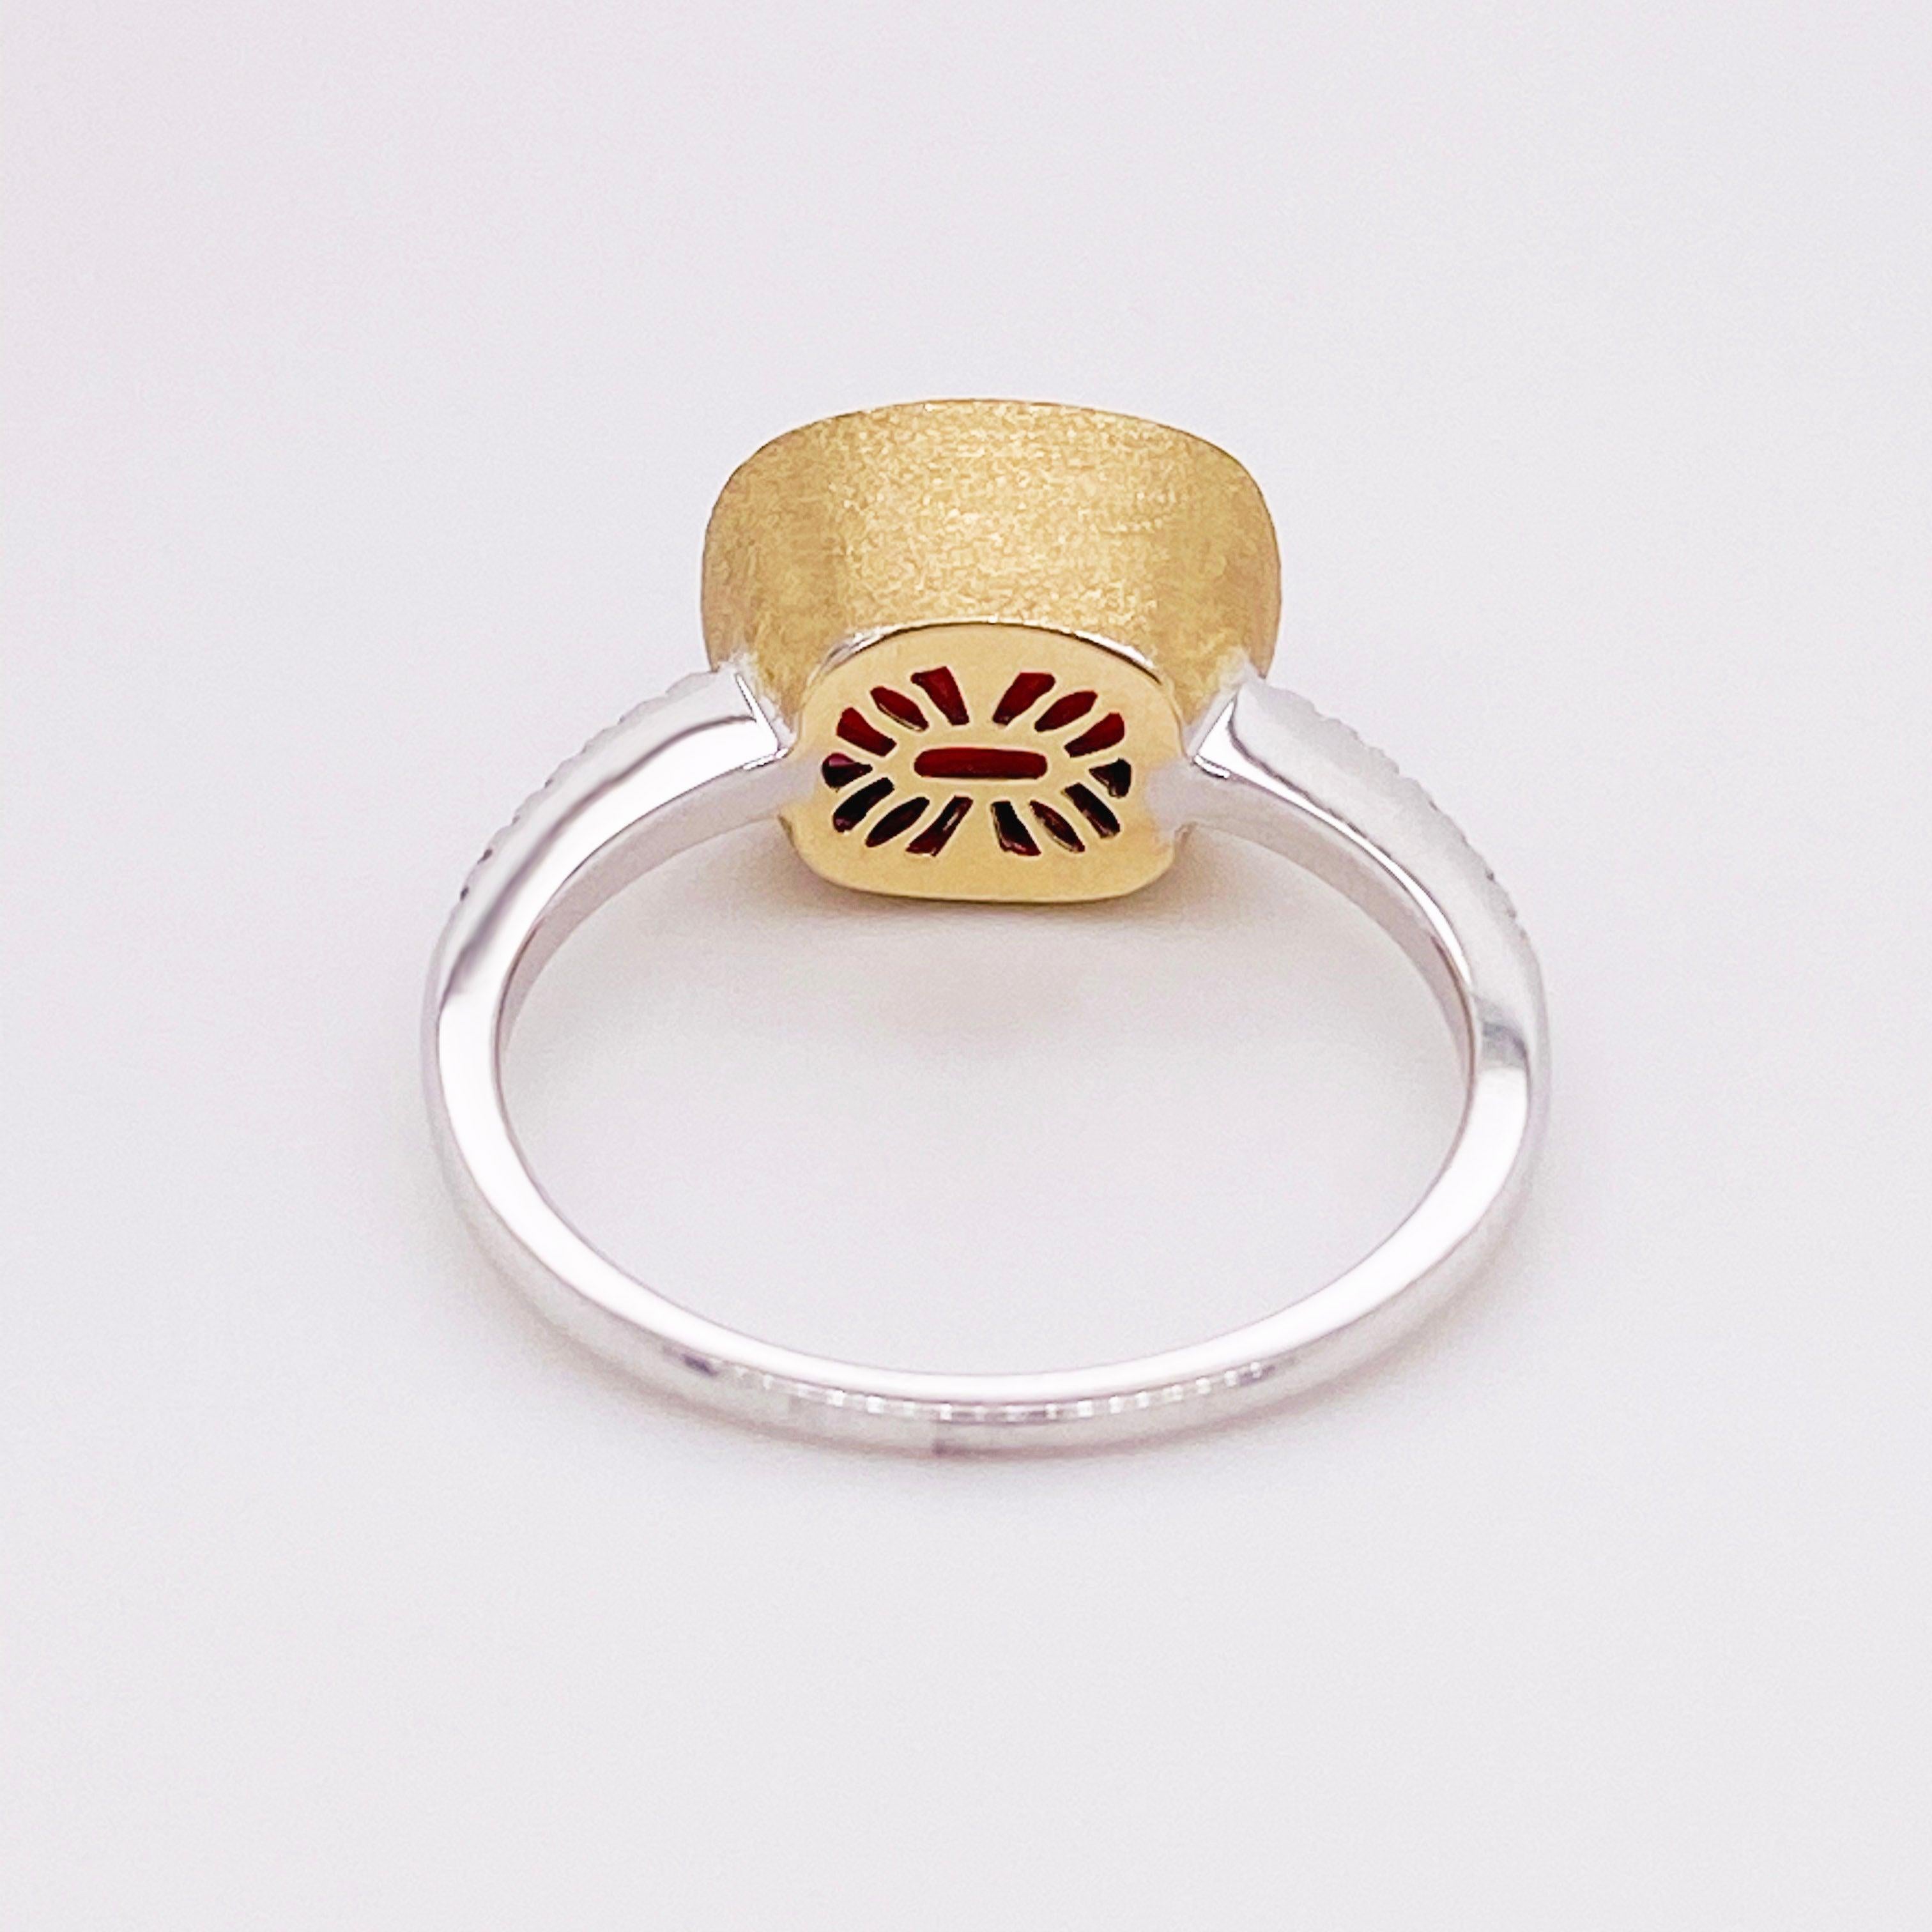 For Sale:  Garnet Diamond Ring, Red Garnet, Mixed Metal, 14k White and Yellow Gold, Satin 5